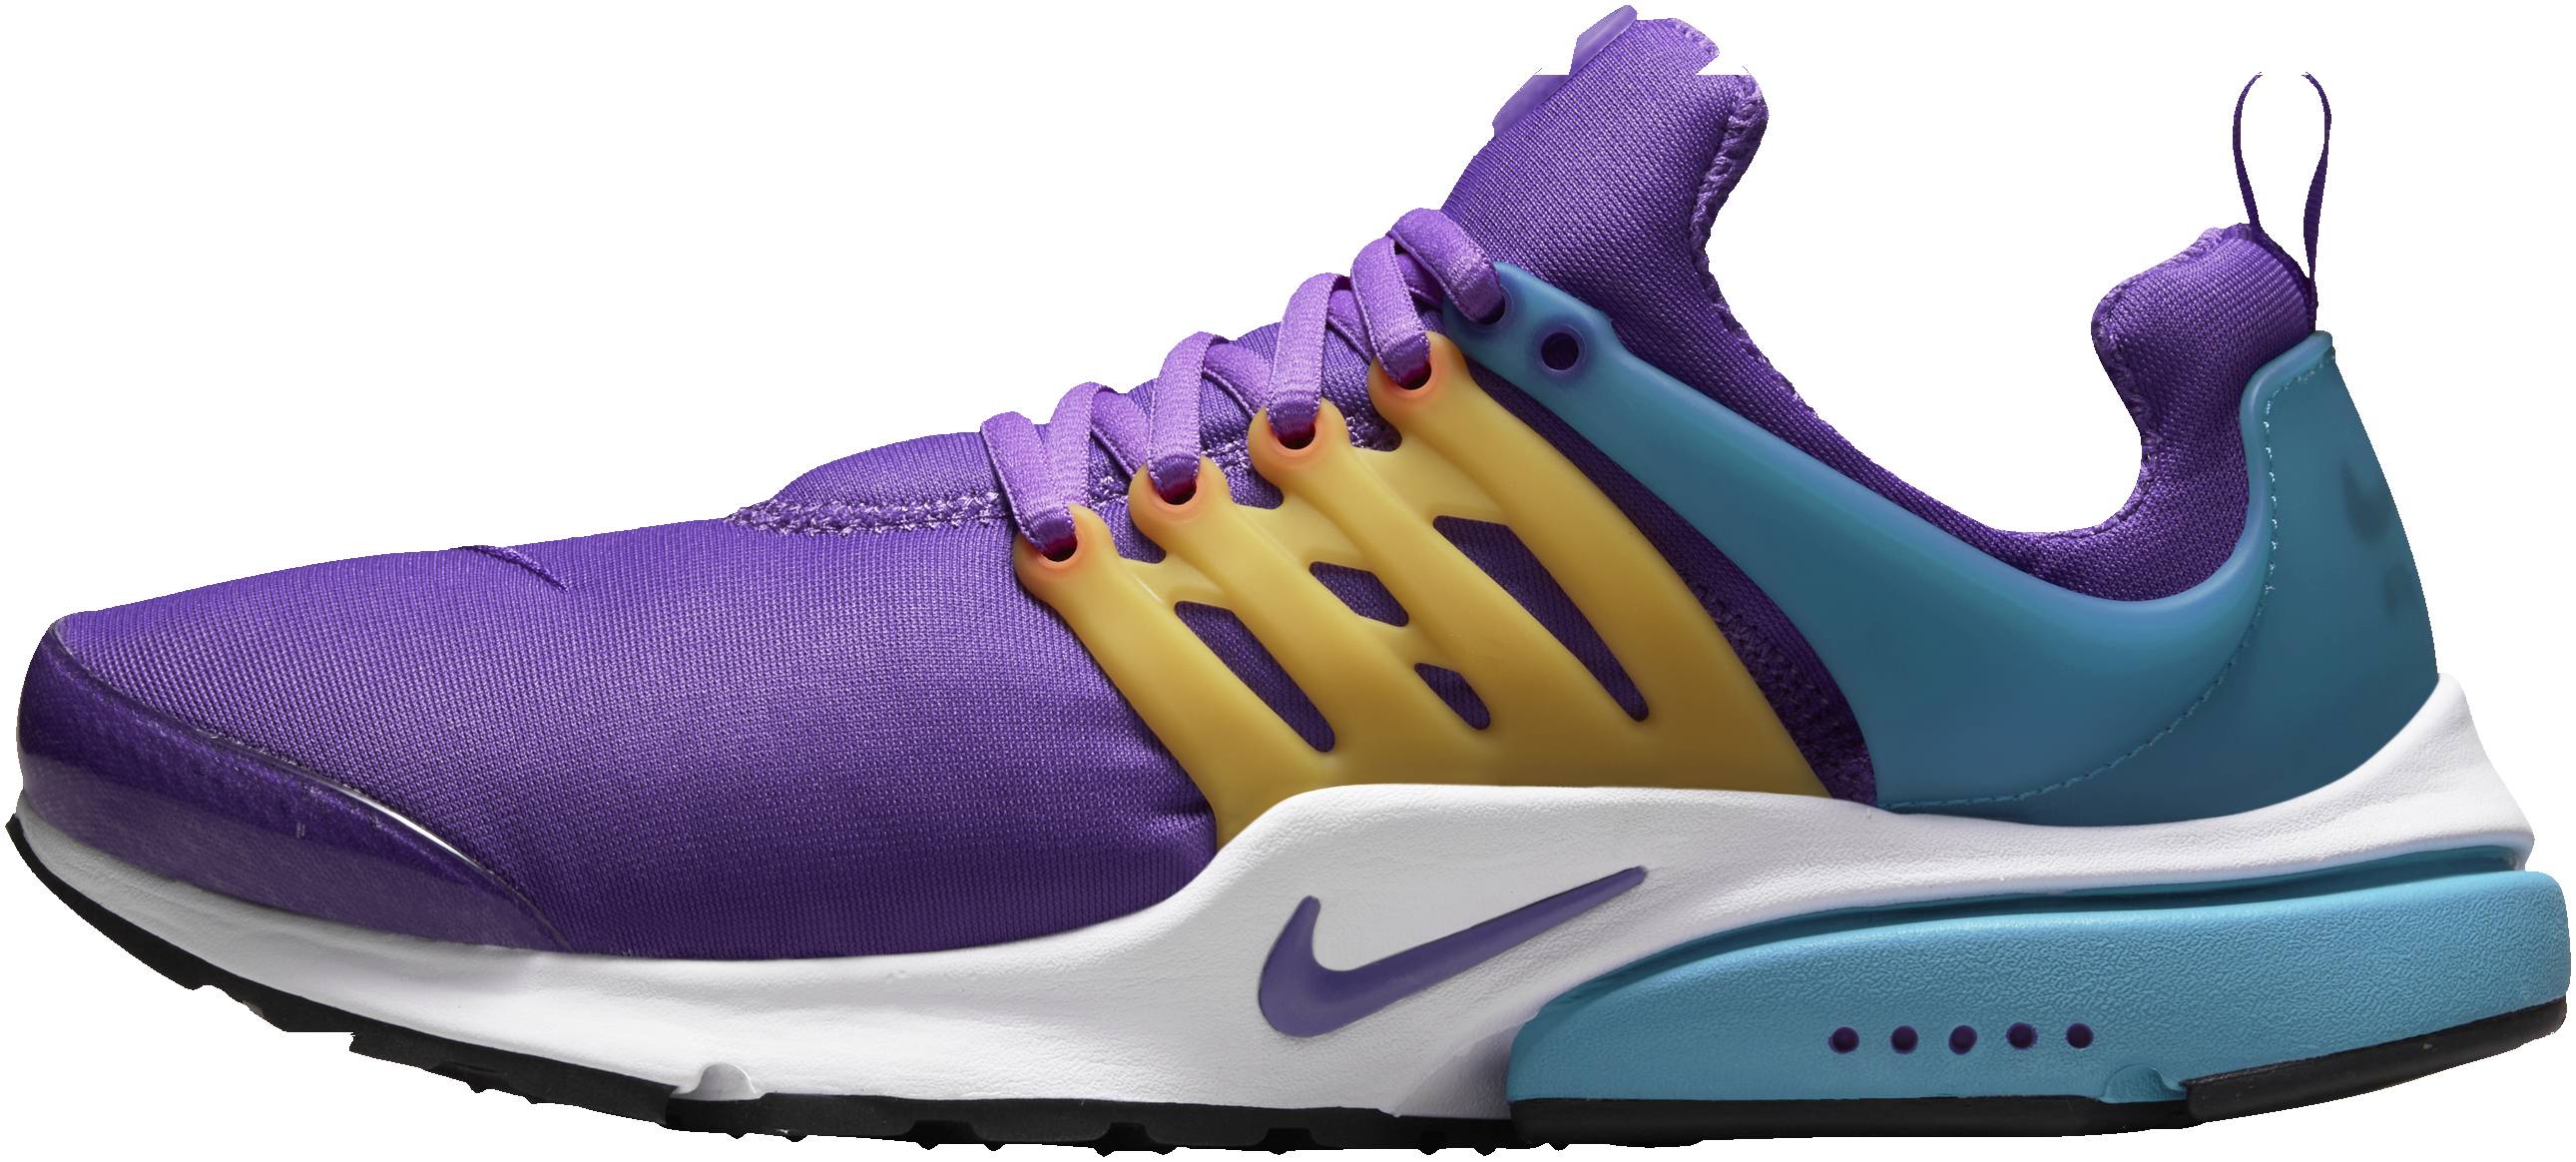 cool purple nike shoes